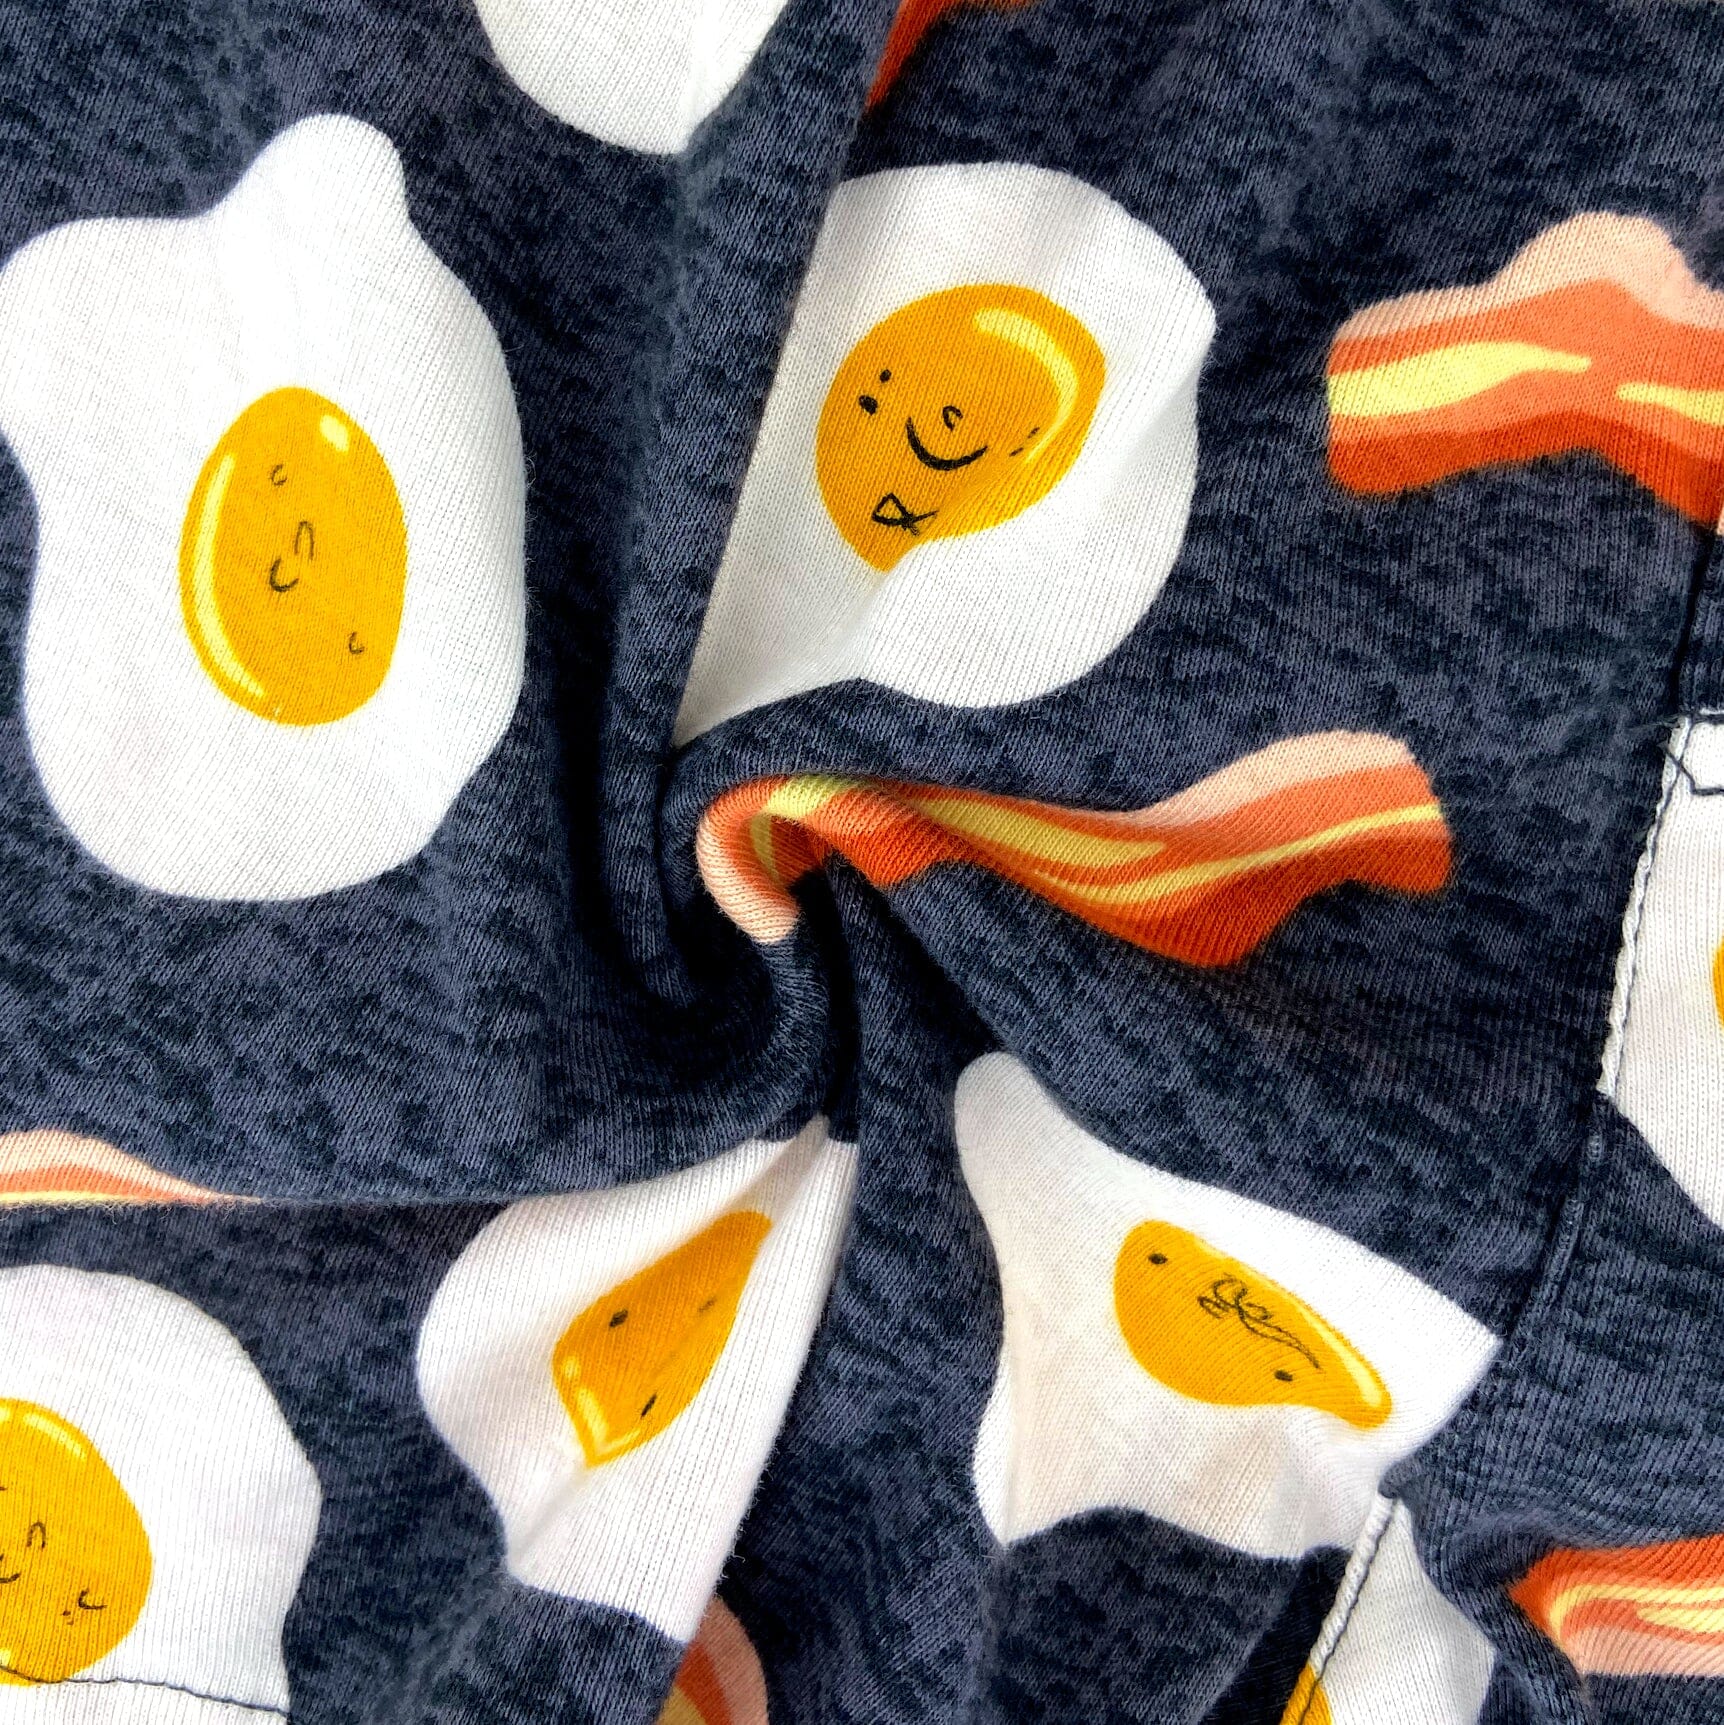 Bacon And Egg Sleep Pajama Shorts For Men. Buy Men's Breakfast Boxers